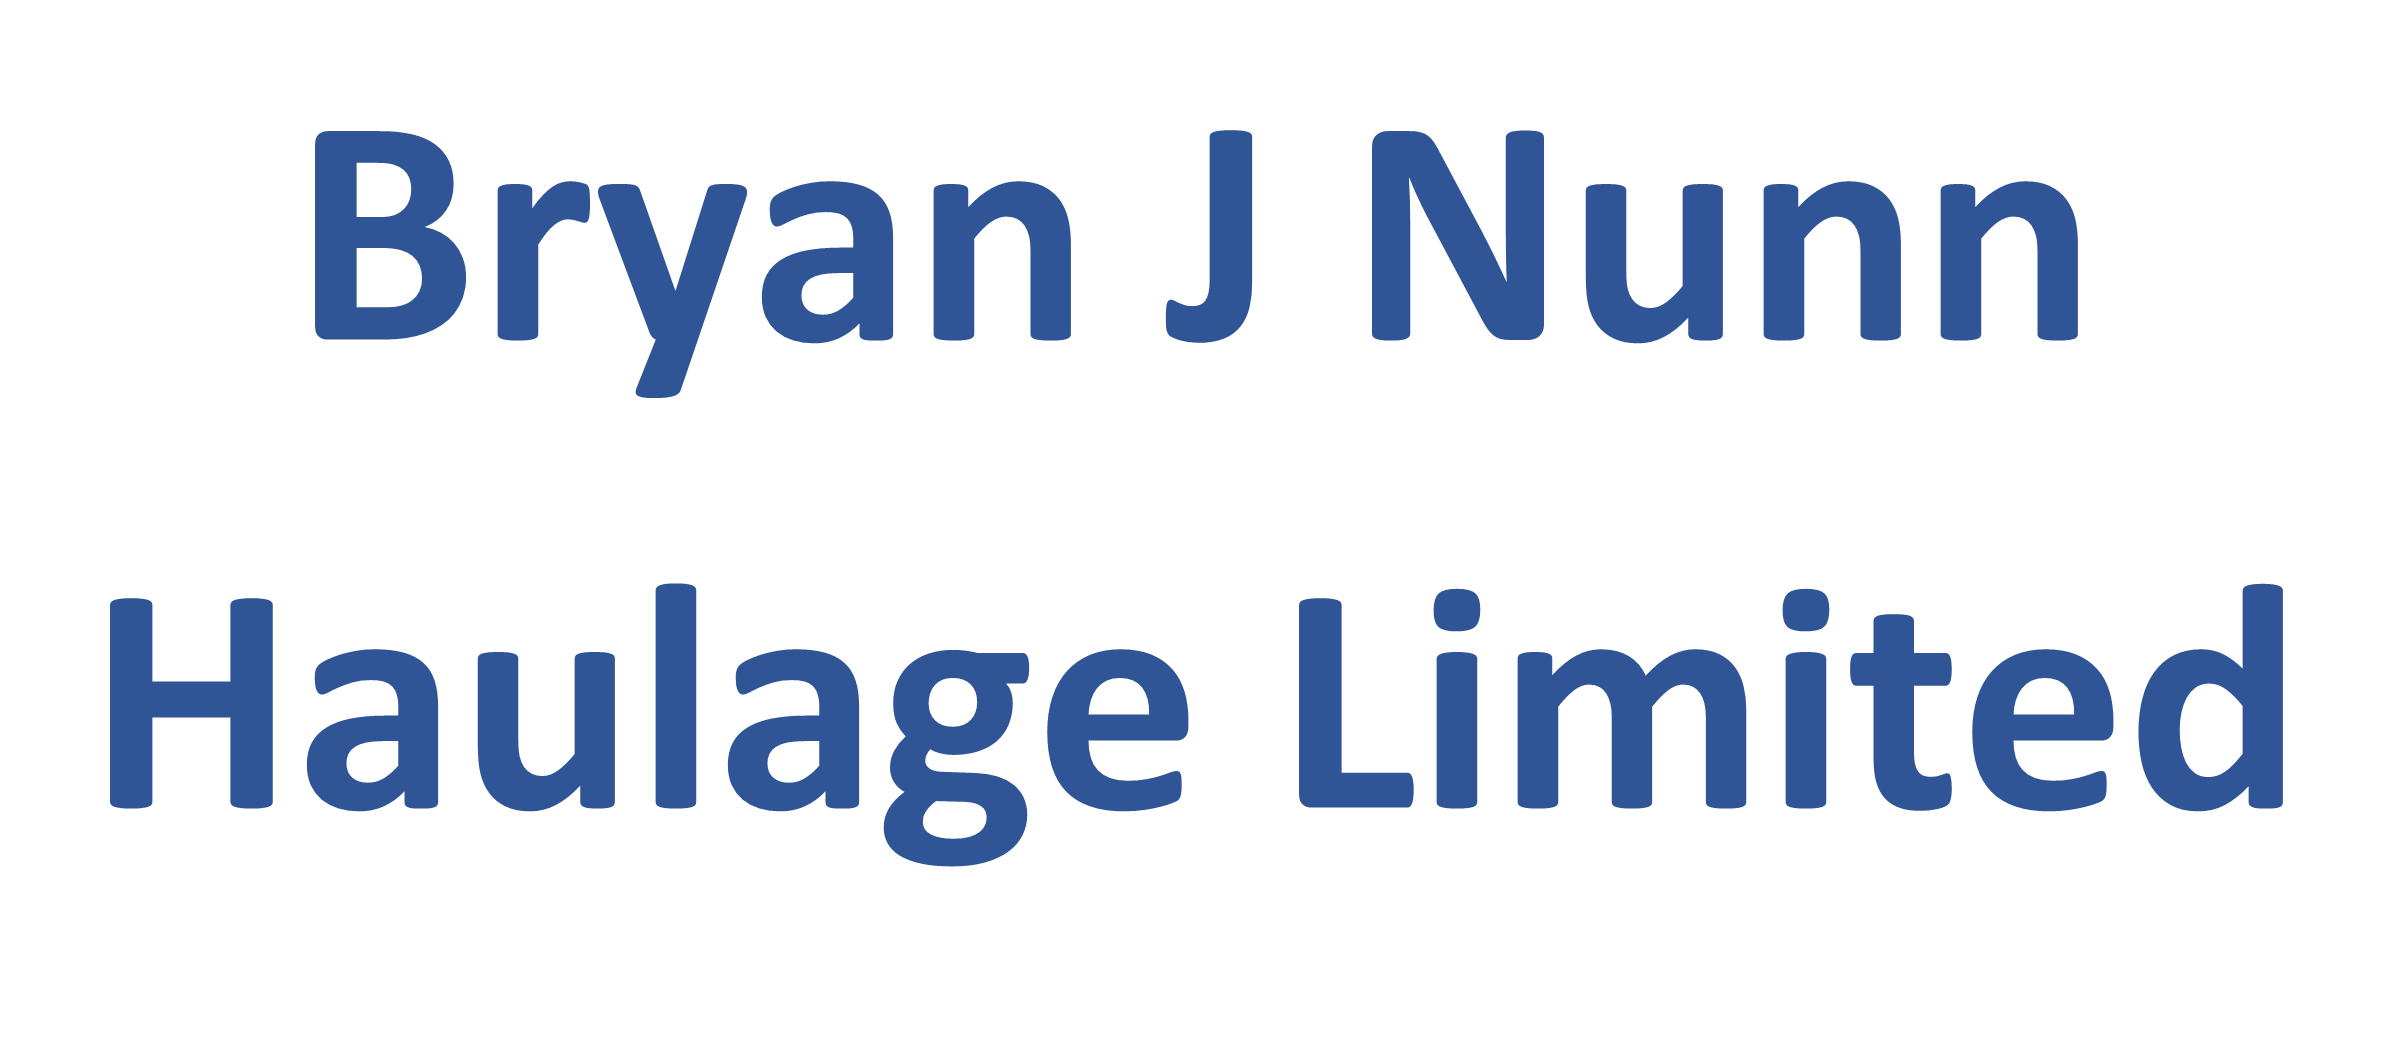 Bryan J Nunn Haulage Limited